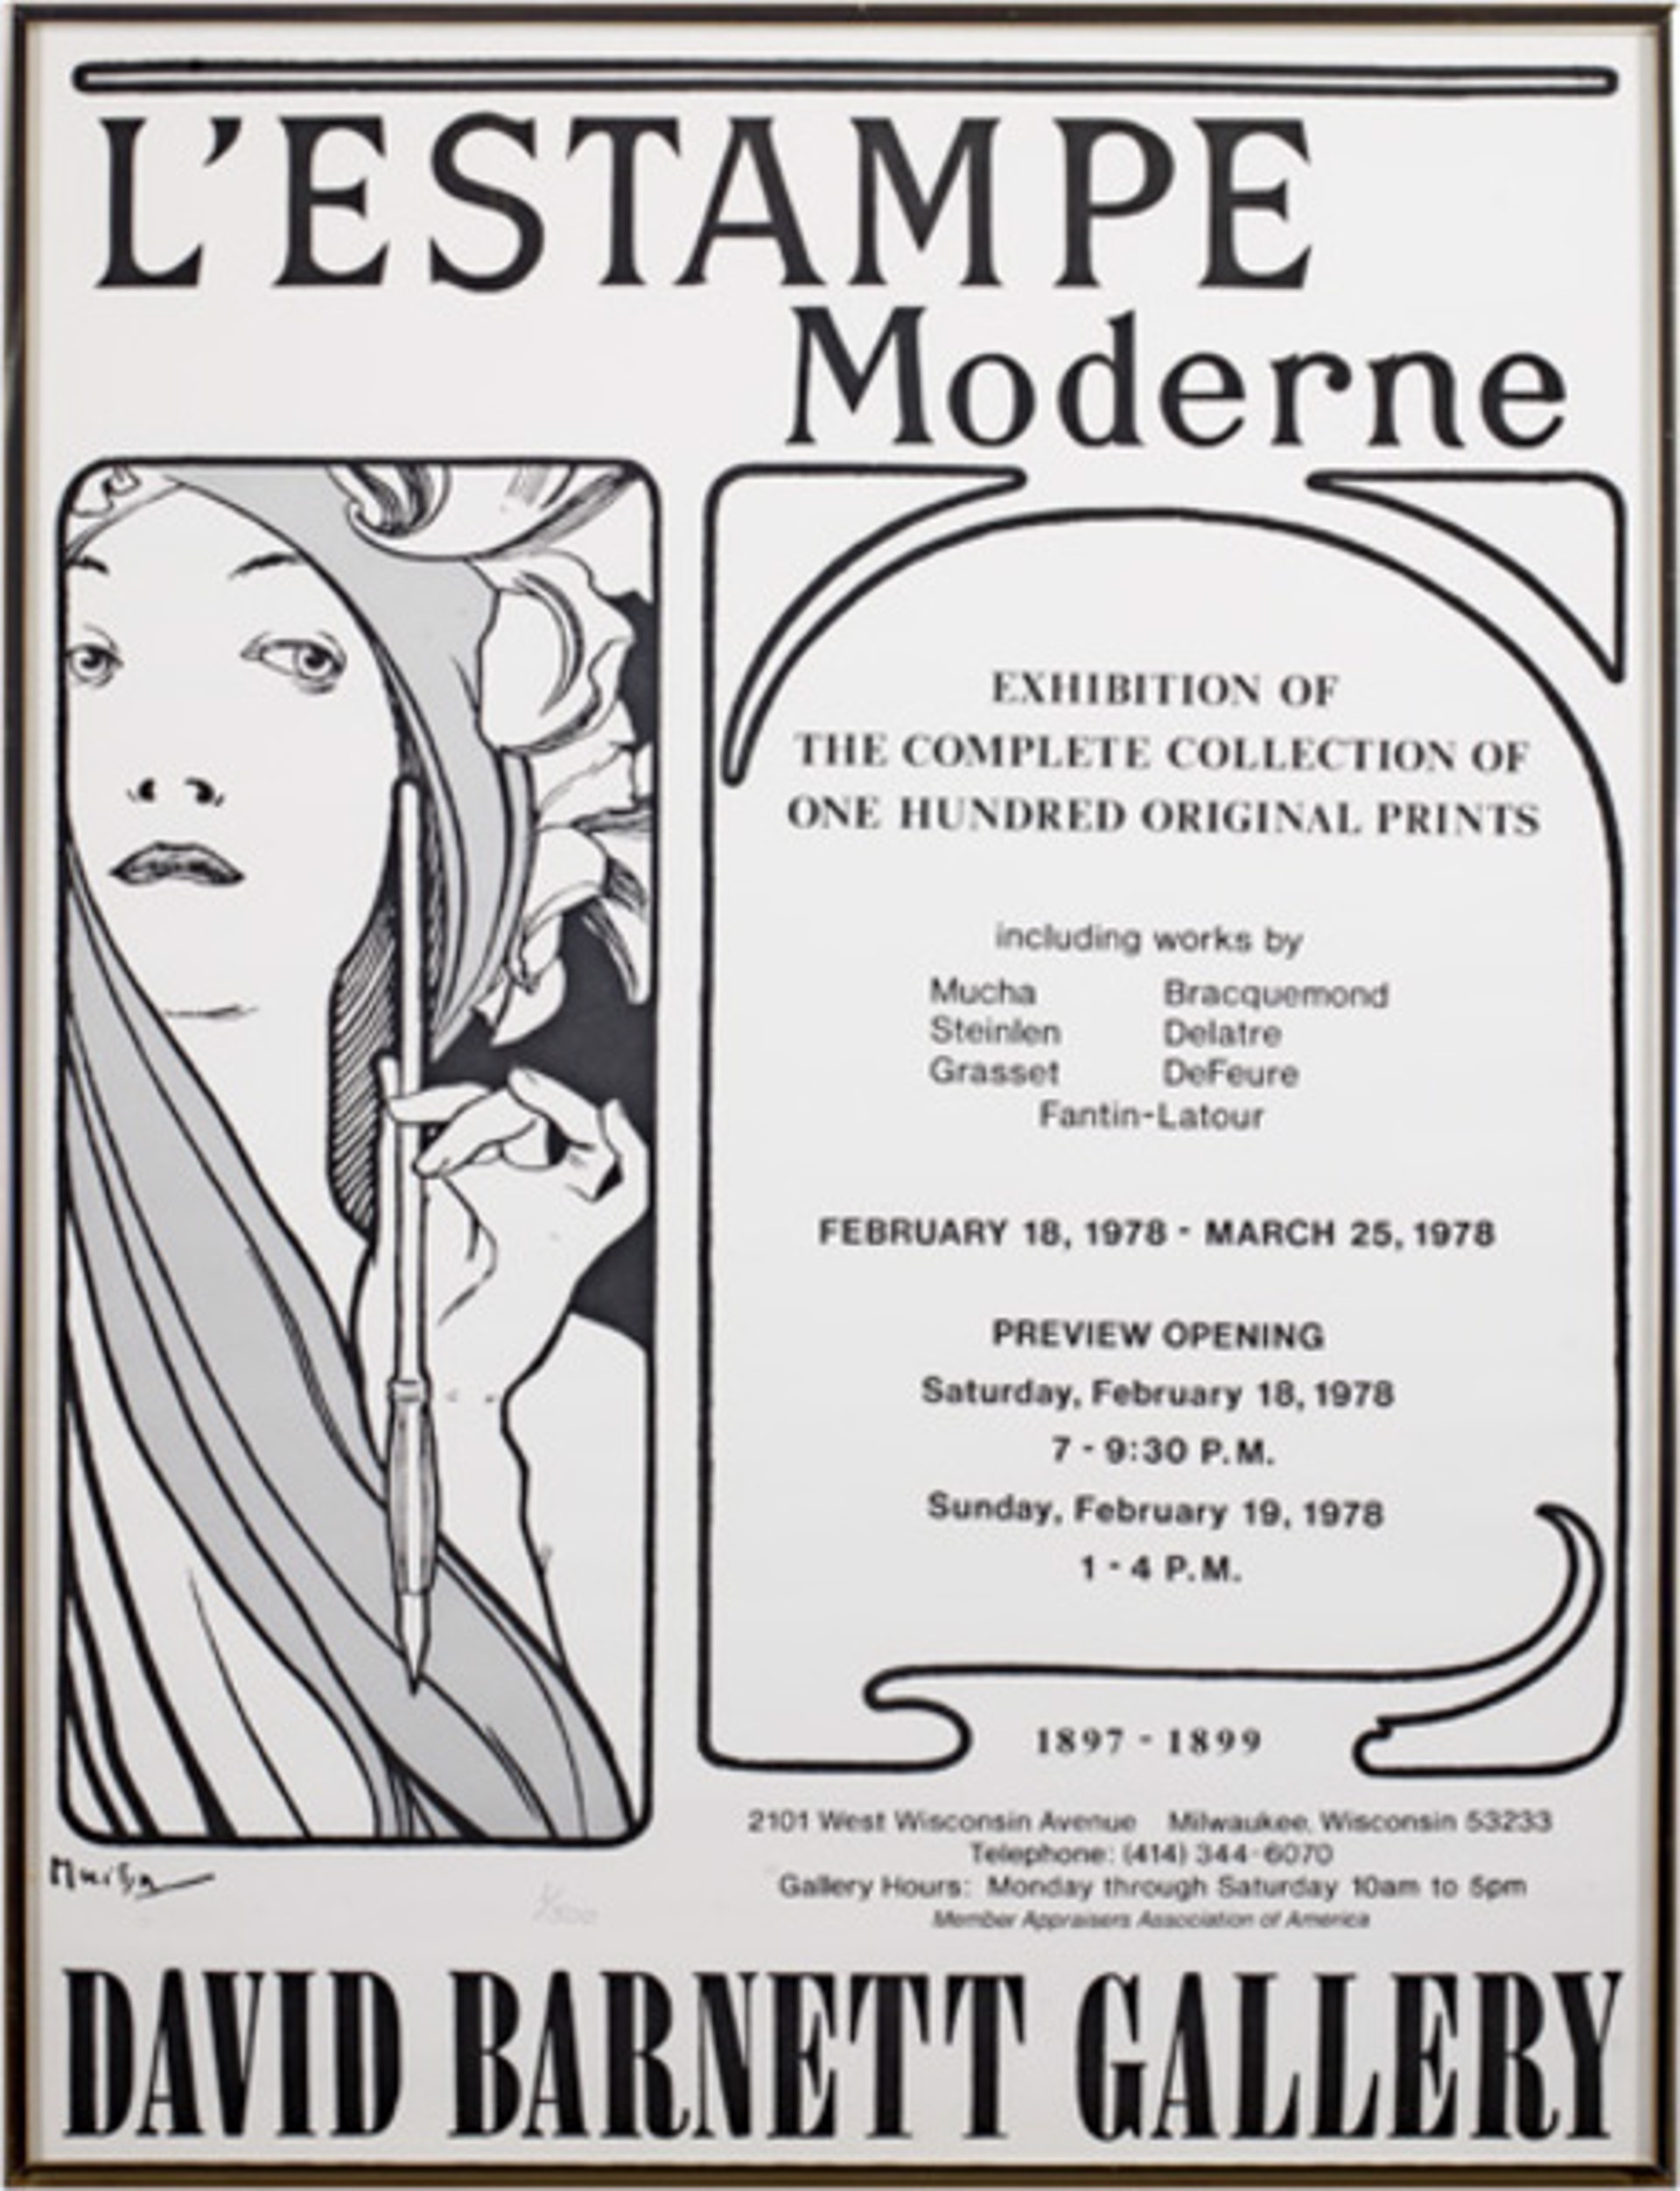 L'Estampe Moderne  - David Barnett Gallery Exhibition, Feb. 18, 1978 - Mar. 25, 1978 by Alphonse Mucha (after)